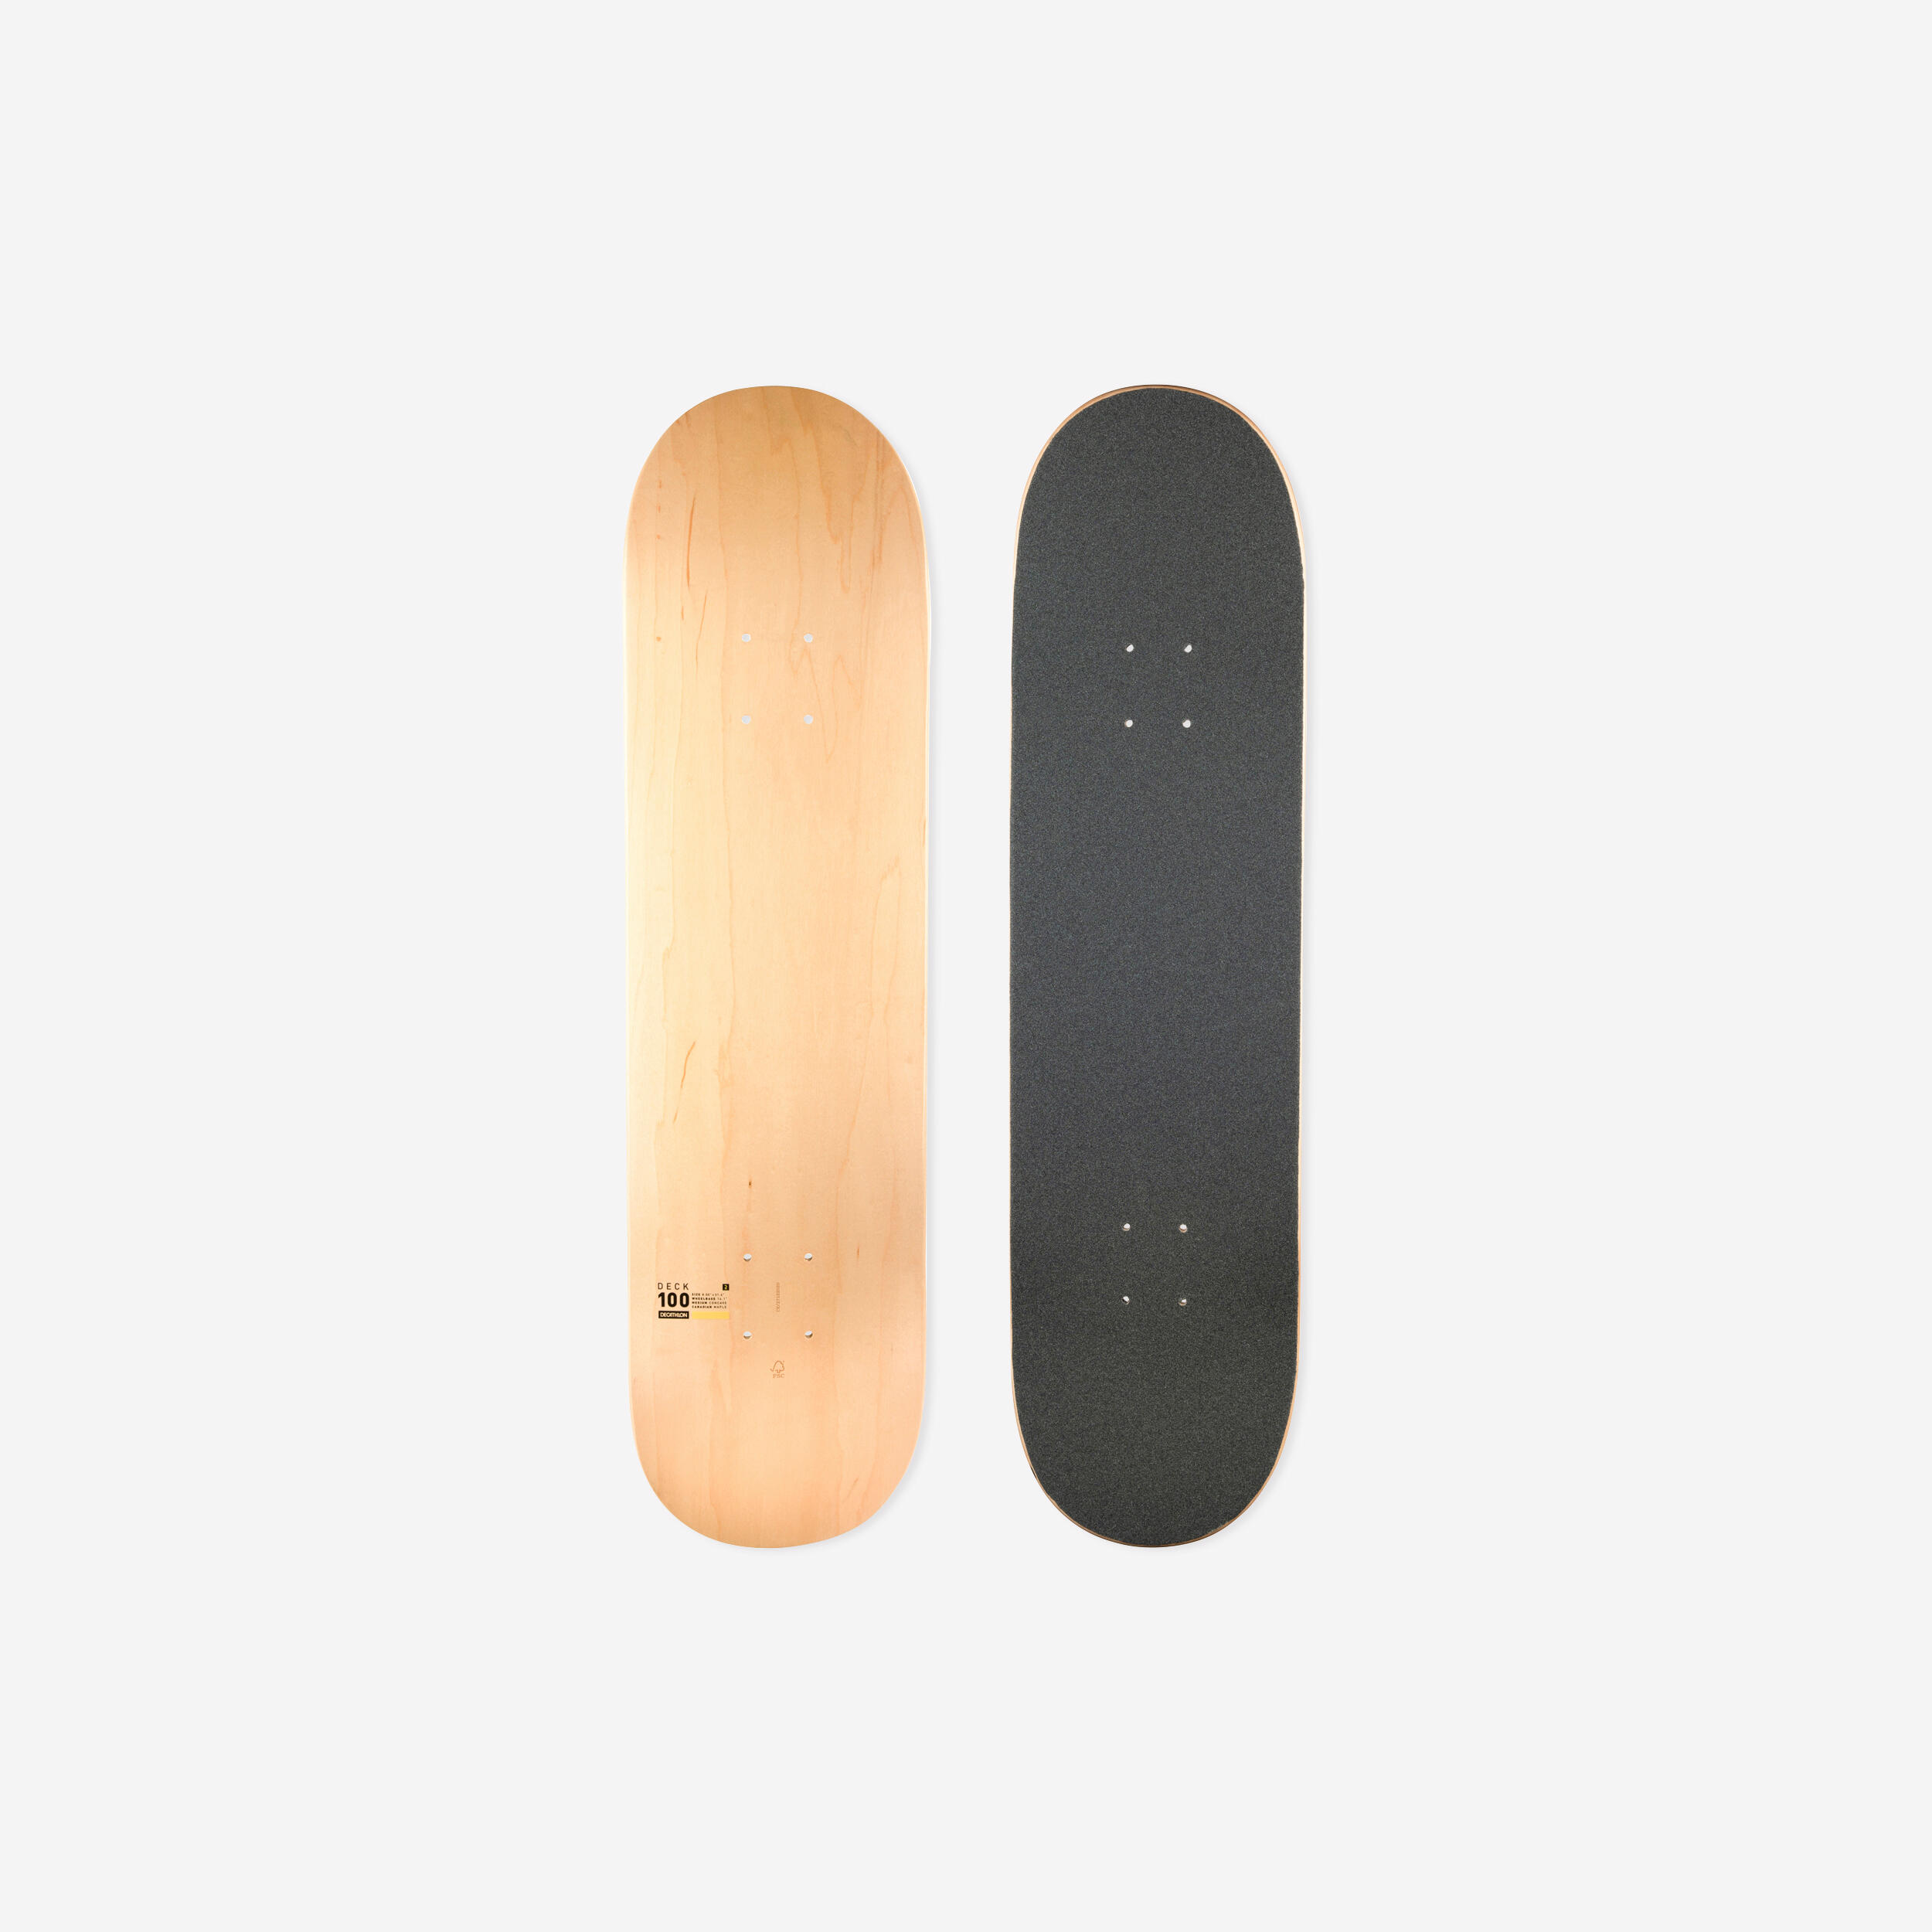 Maple Skateboard Deck with Grip DK100 8" 1/8